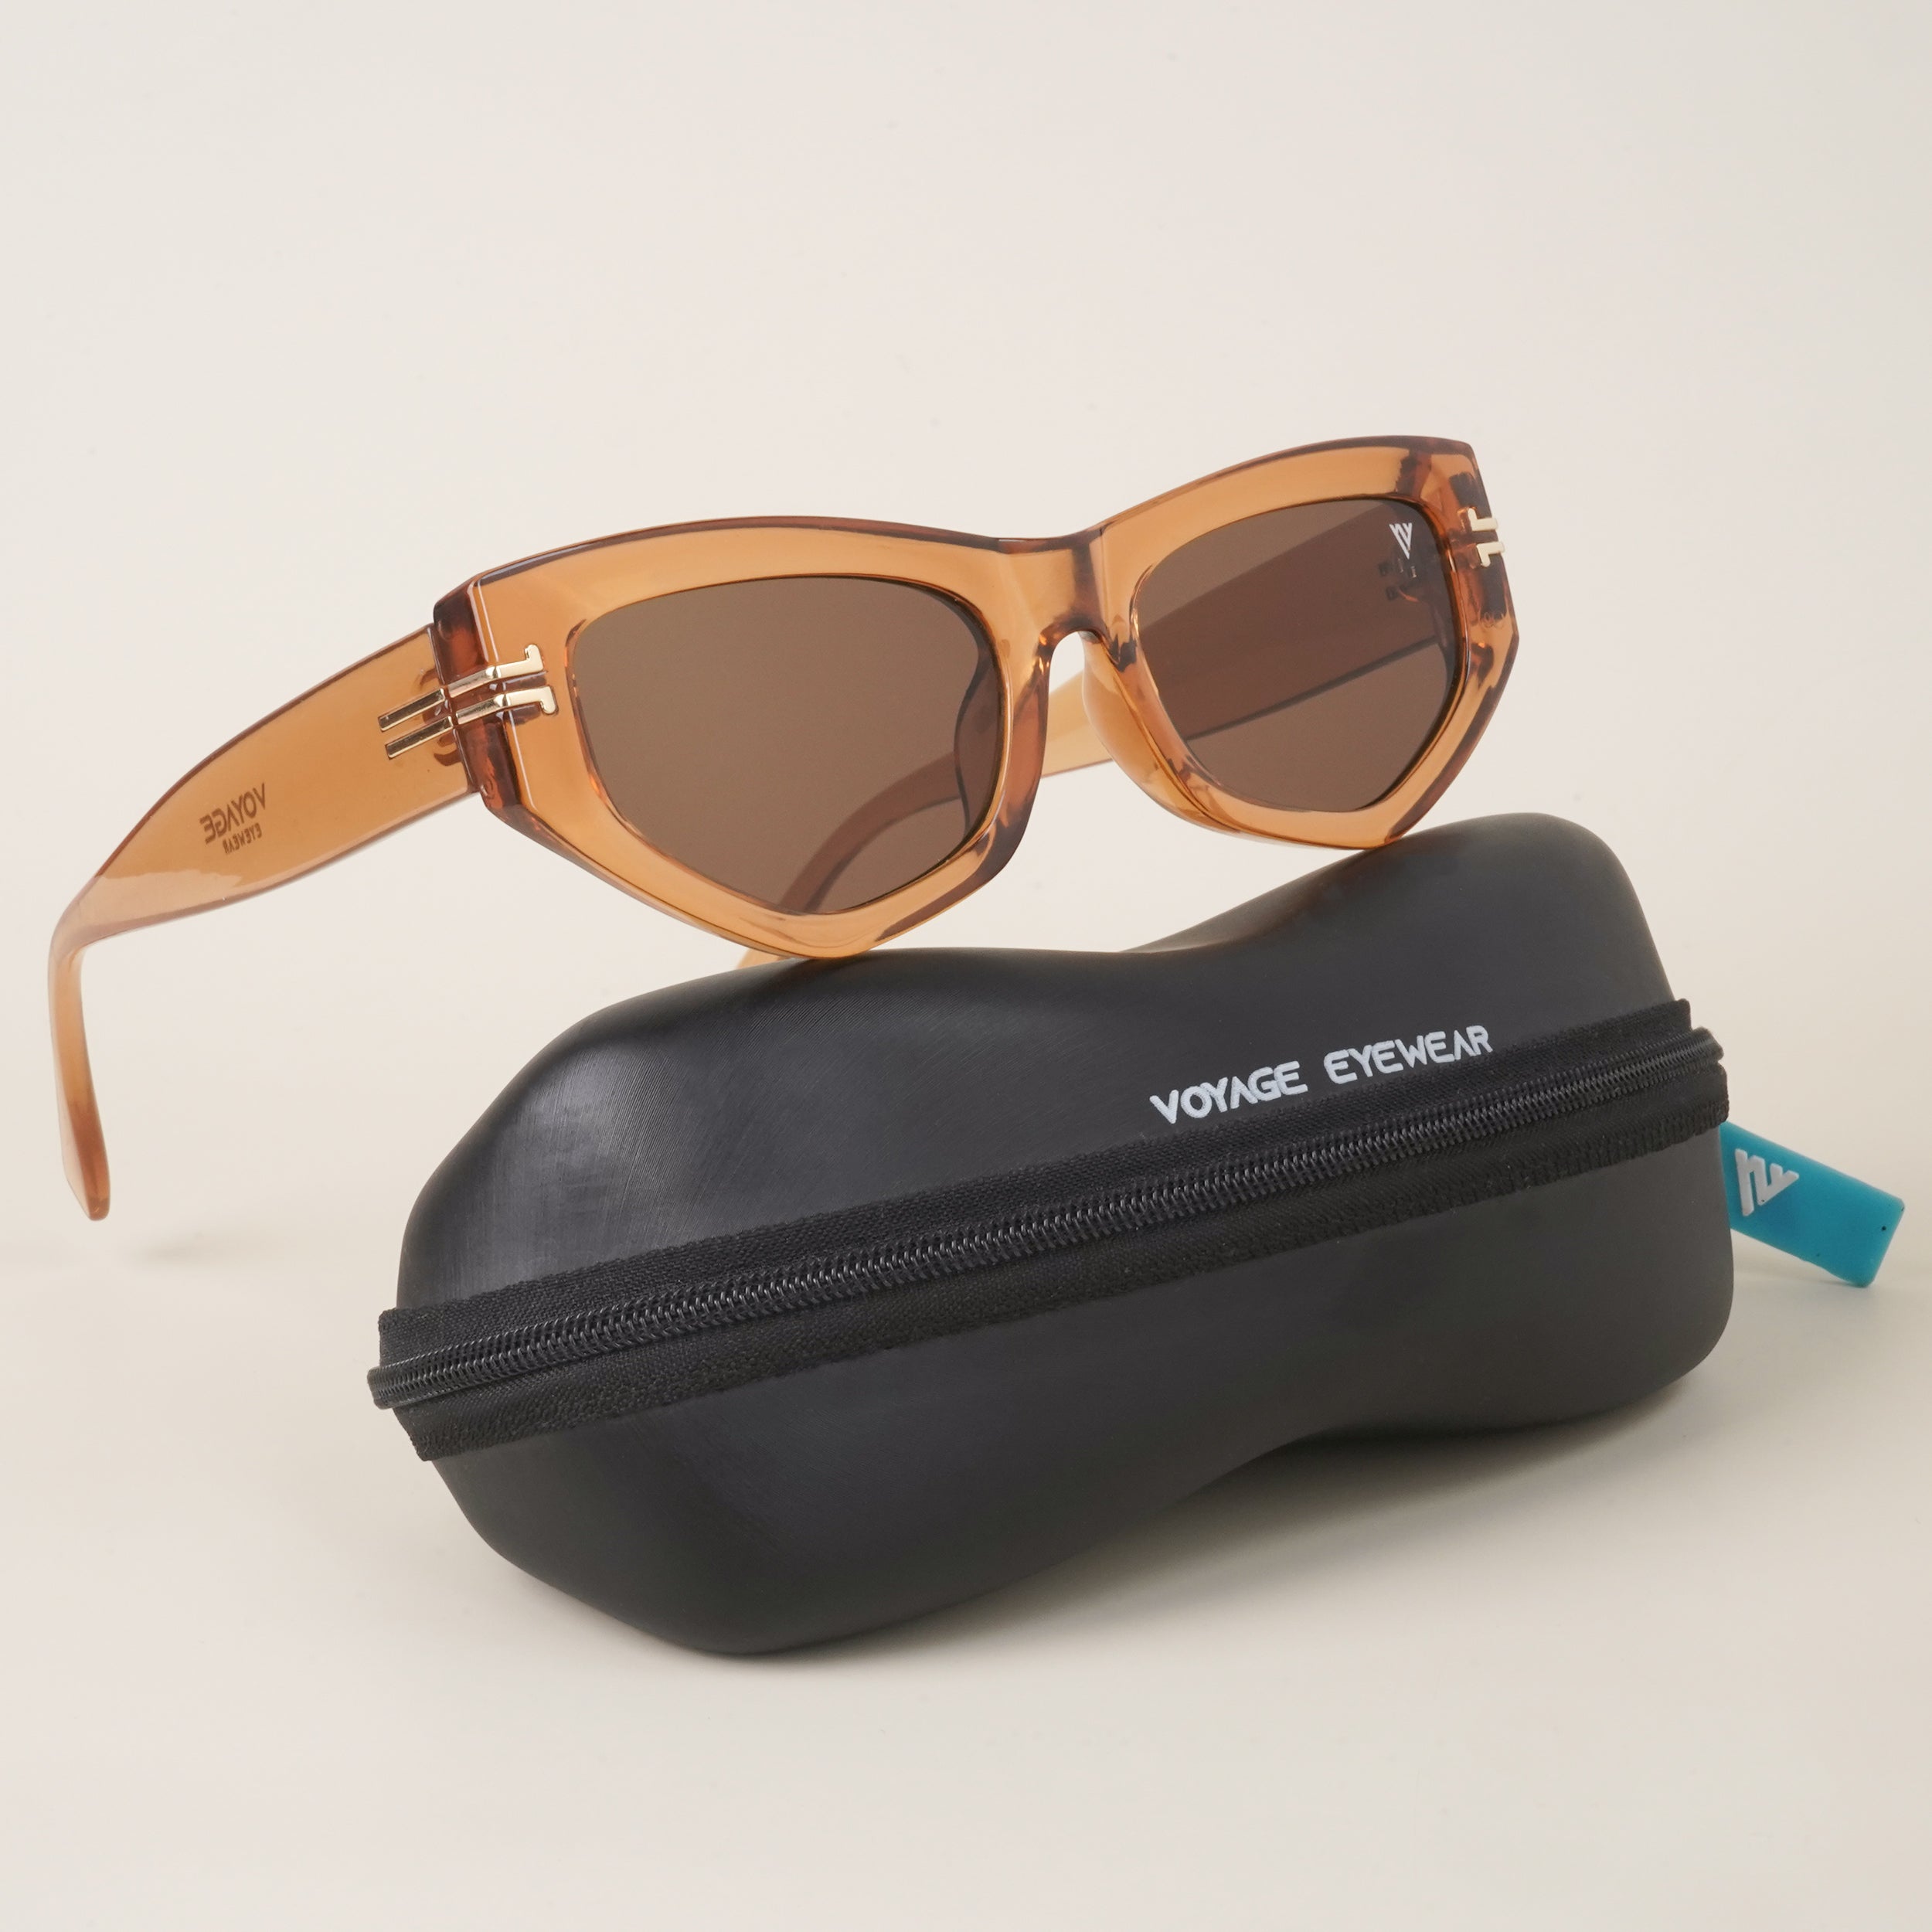 Voyage Brown Cateye Sunglasses MG3658